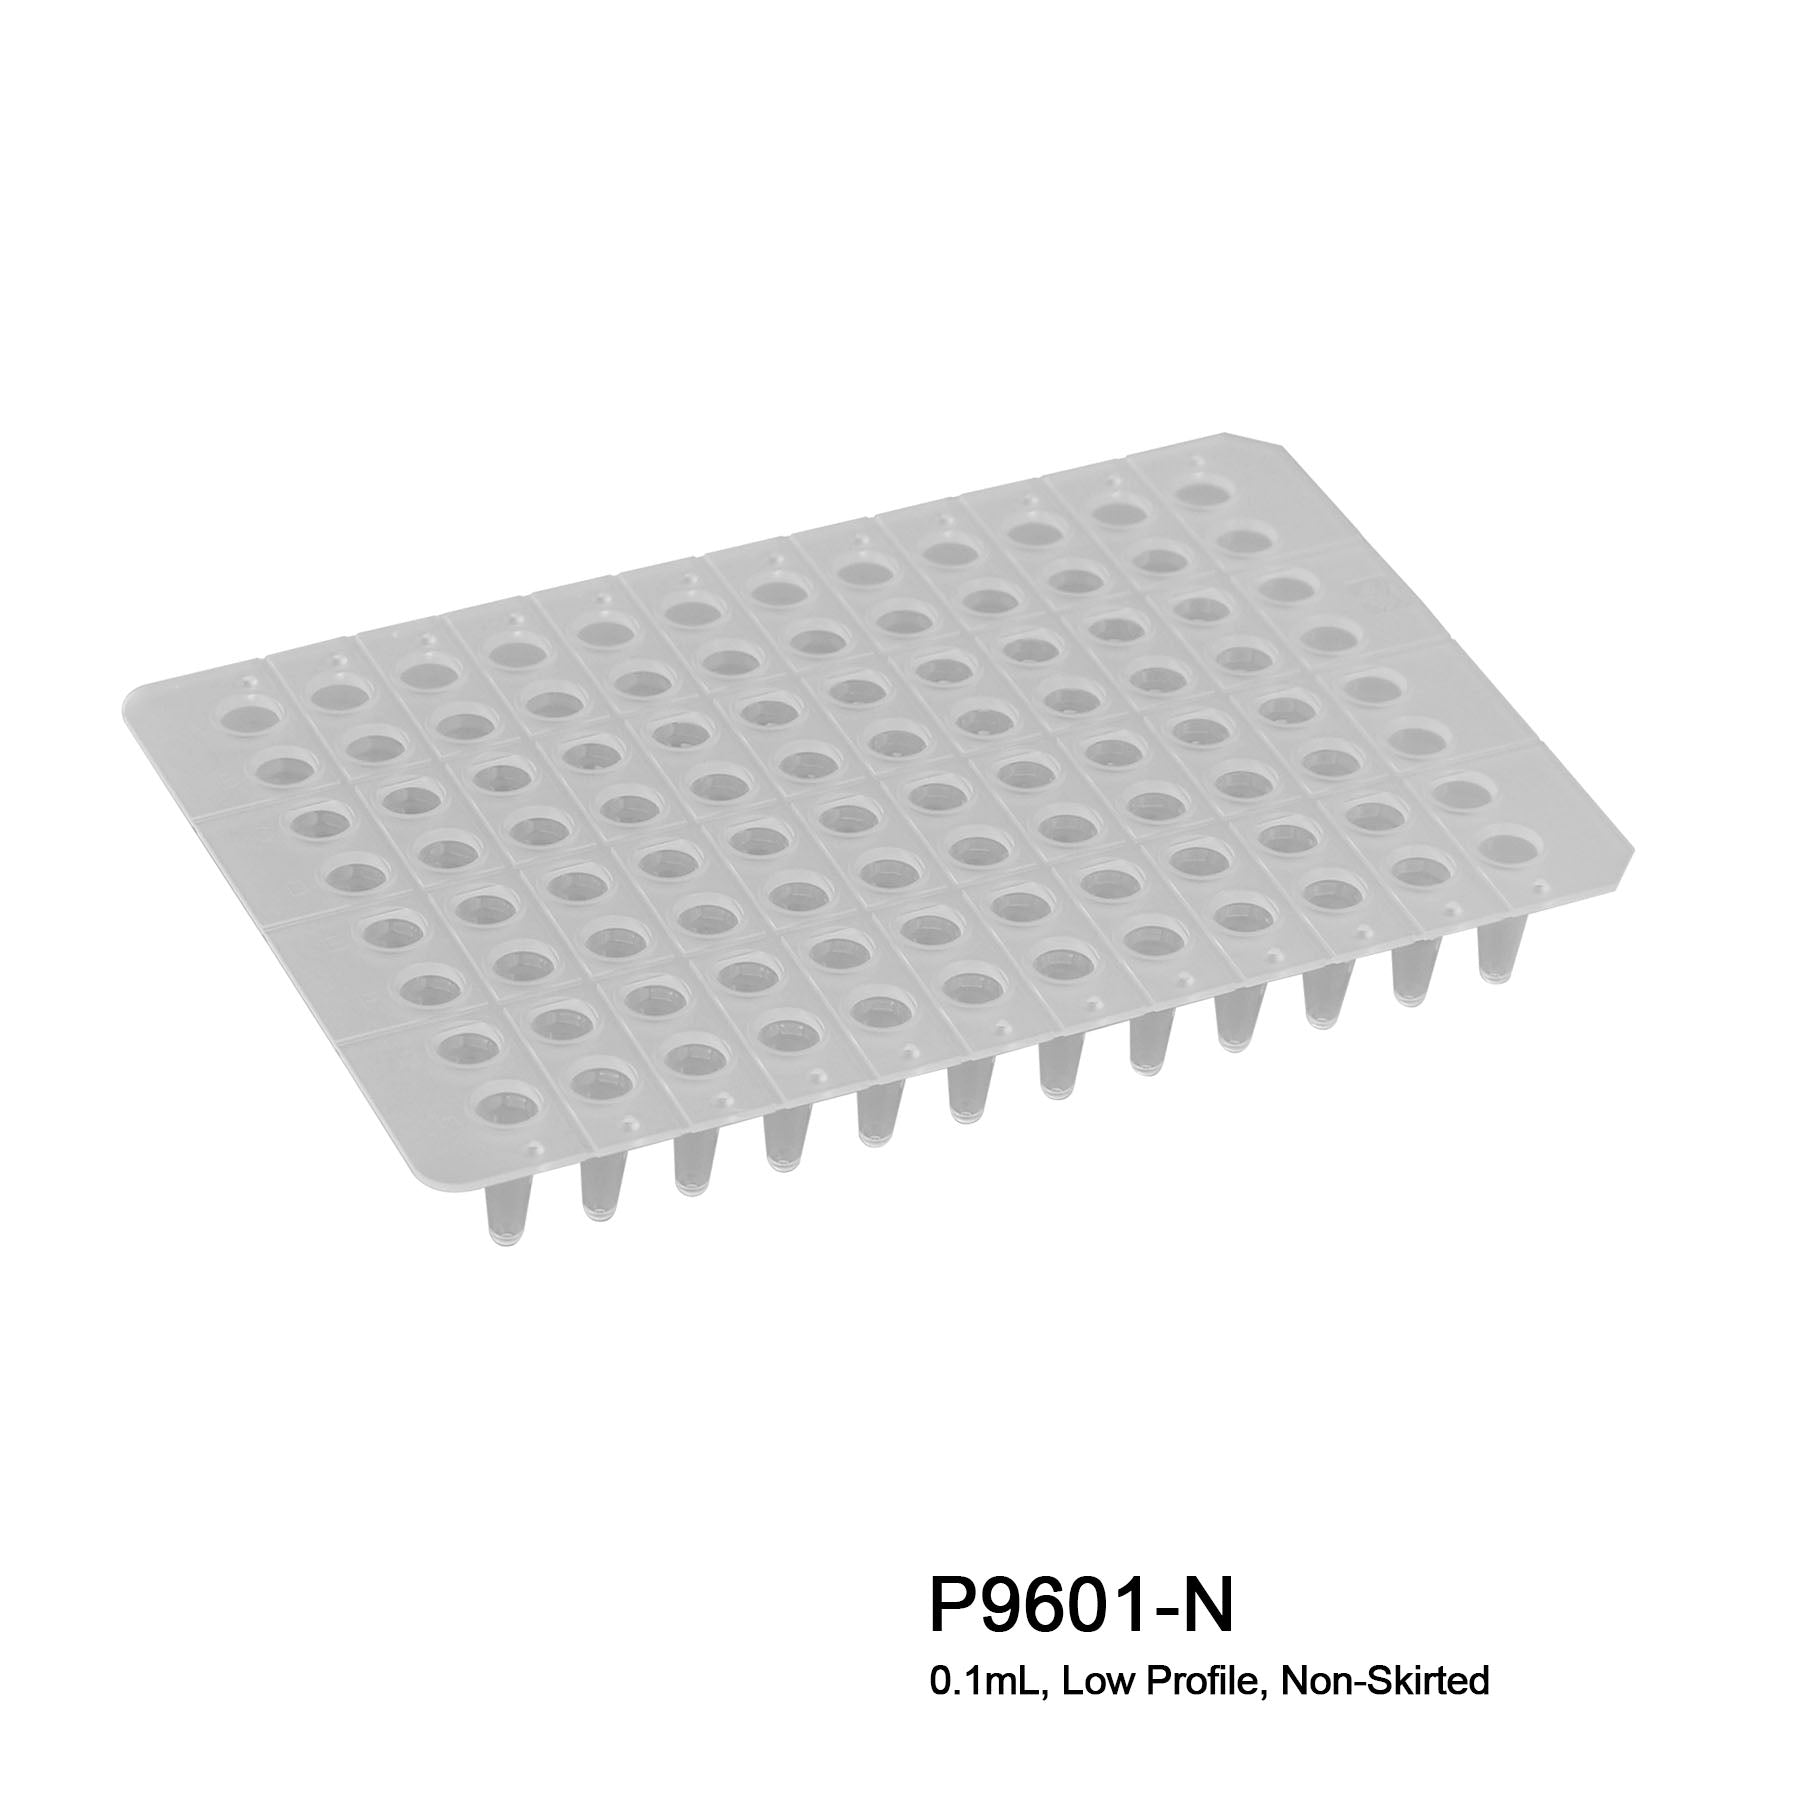 MTC Bio P9601-N, PCR Plates 96 x 0.1ml (Low Profile/Fast) Non-Skirted, 50/pk